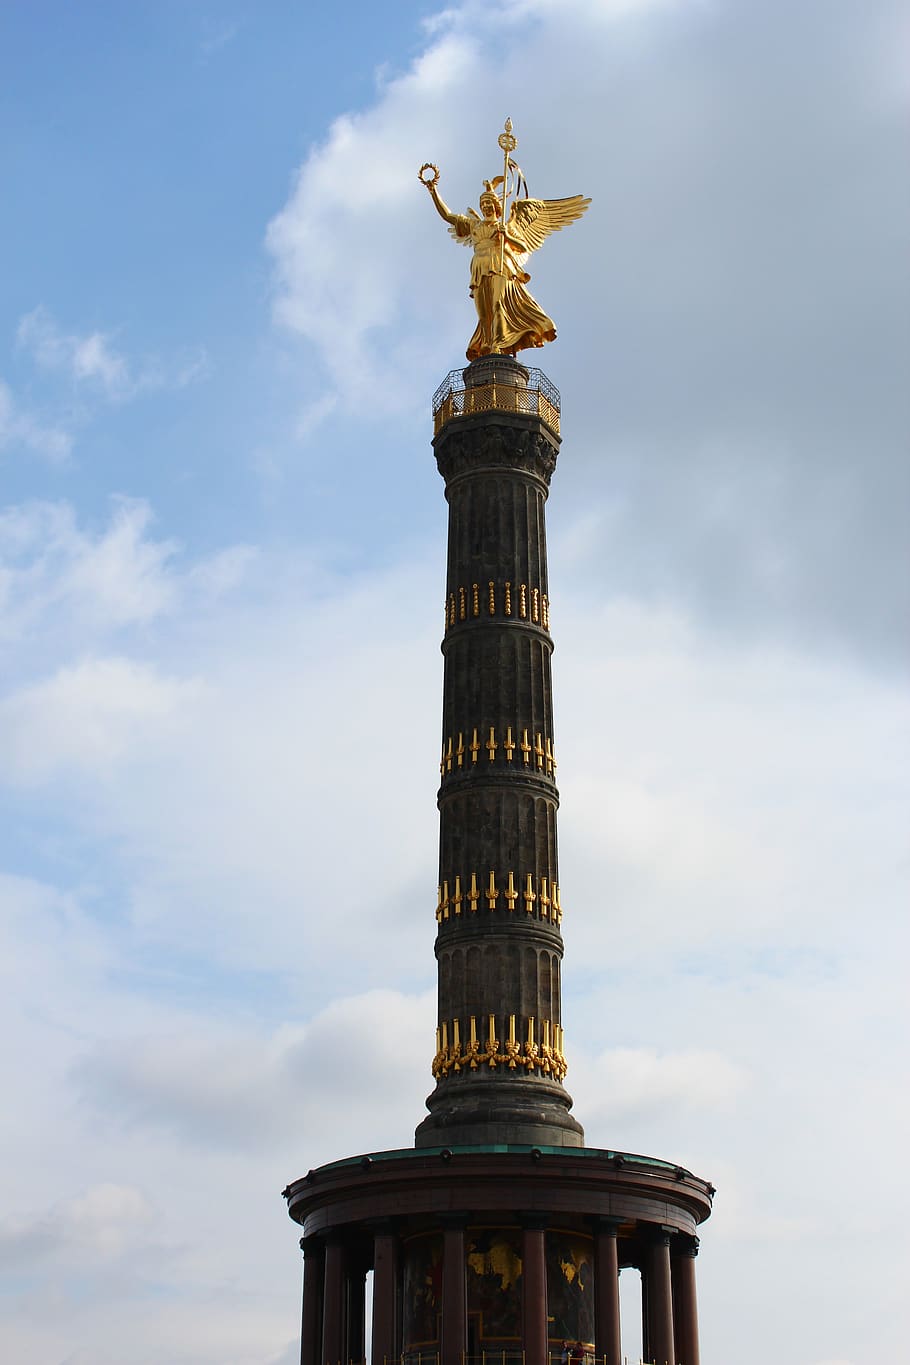 siegessäule, berlin, landmark, sky, clouds, places of interest